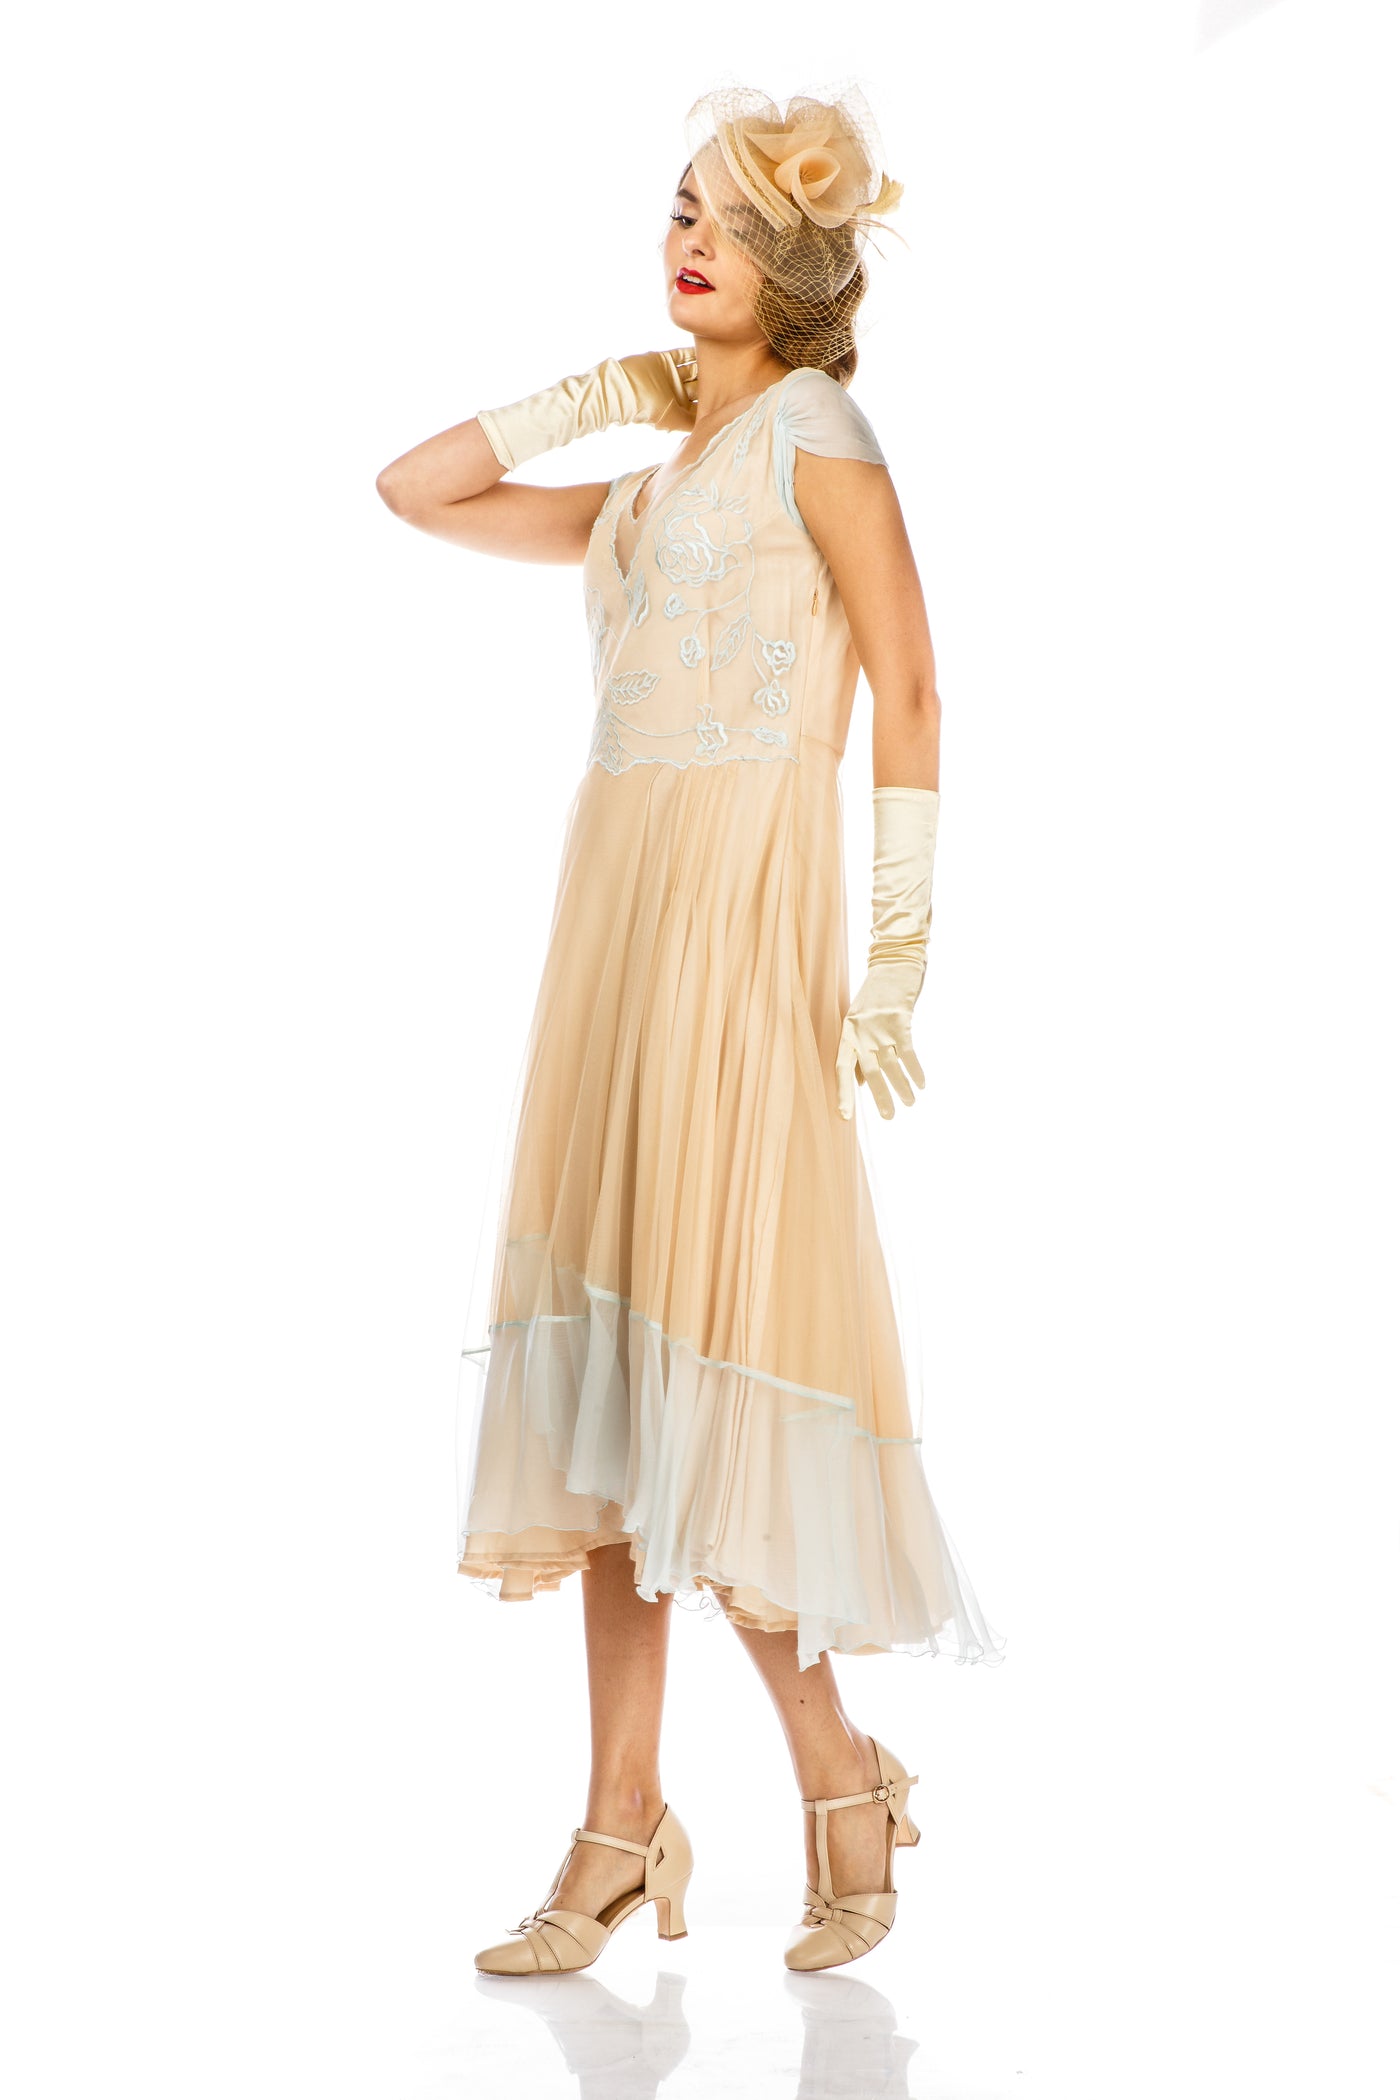 Ayla 1920s Style Wedding Dress 40822 in Nude Mint by Nataya